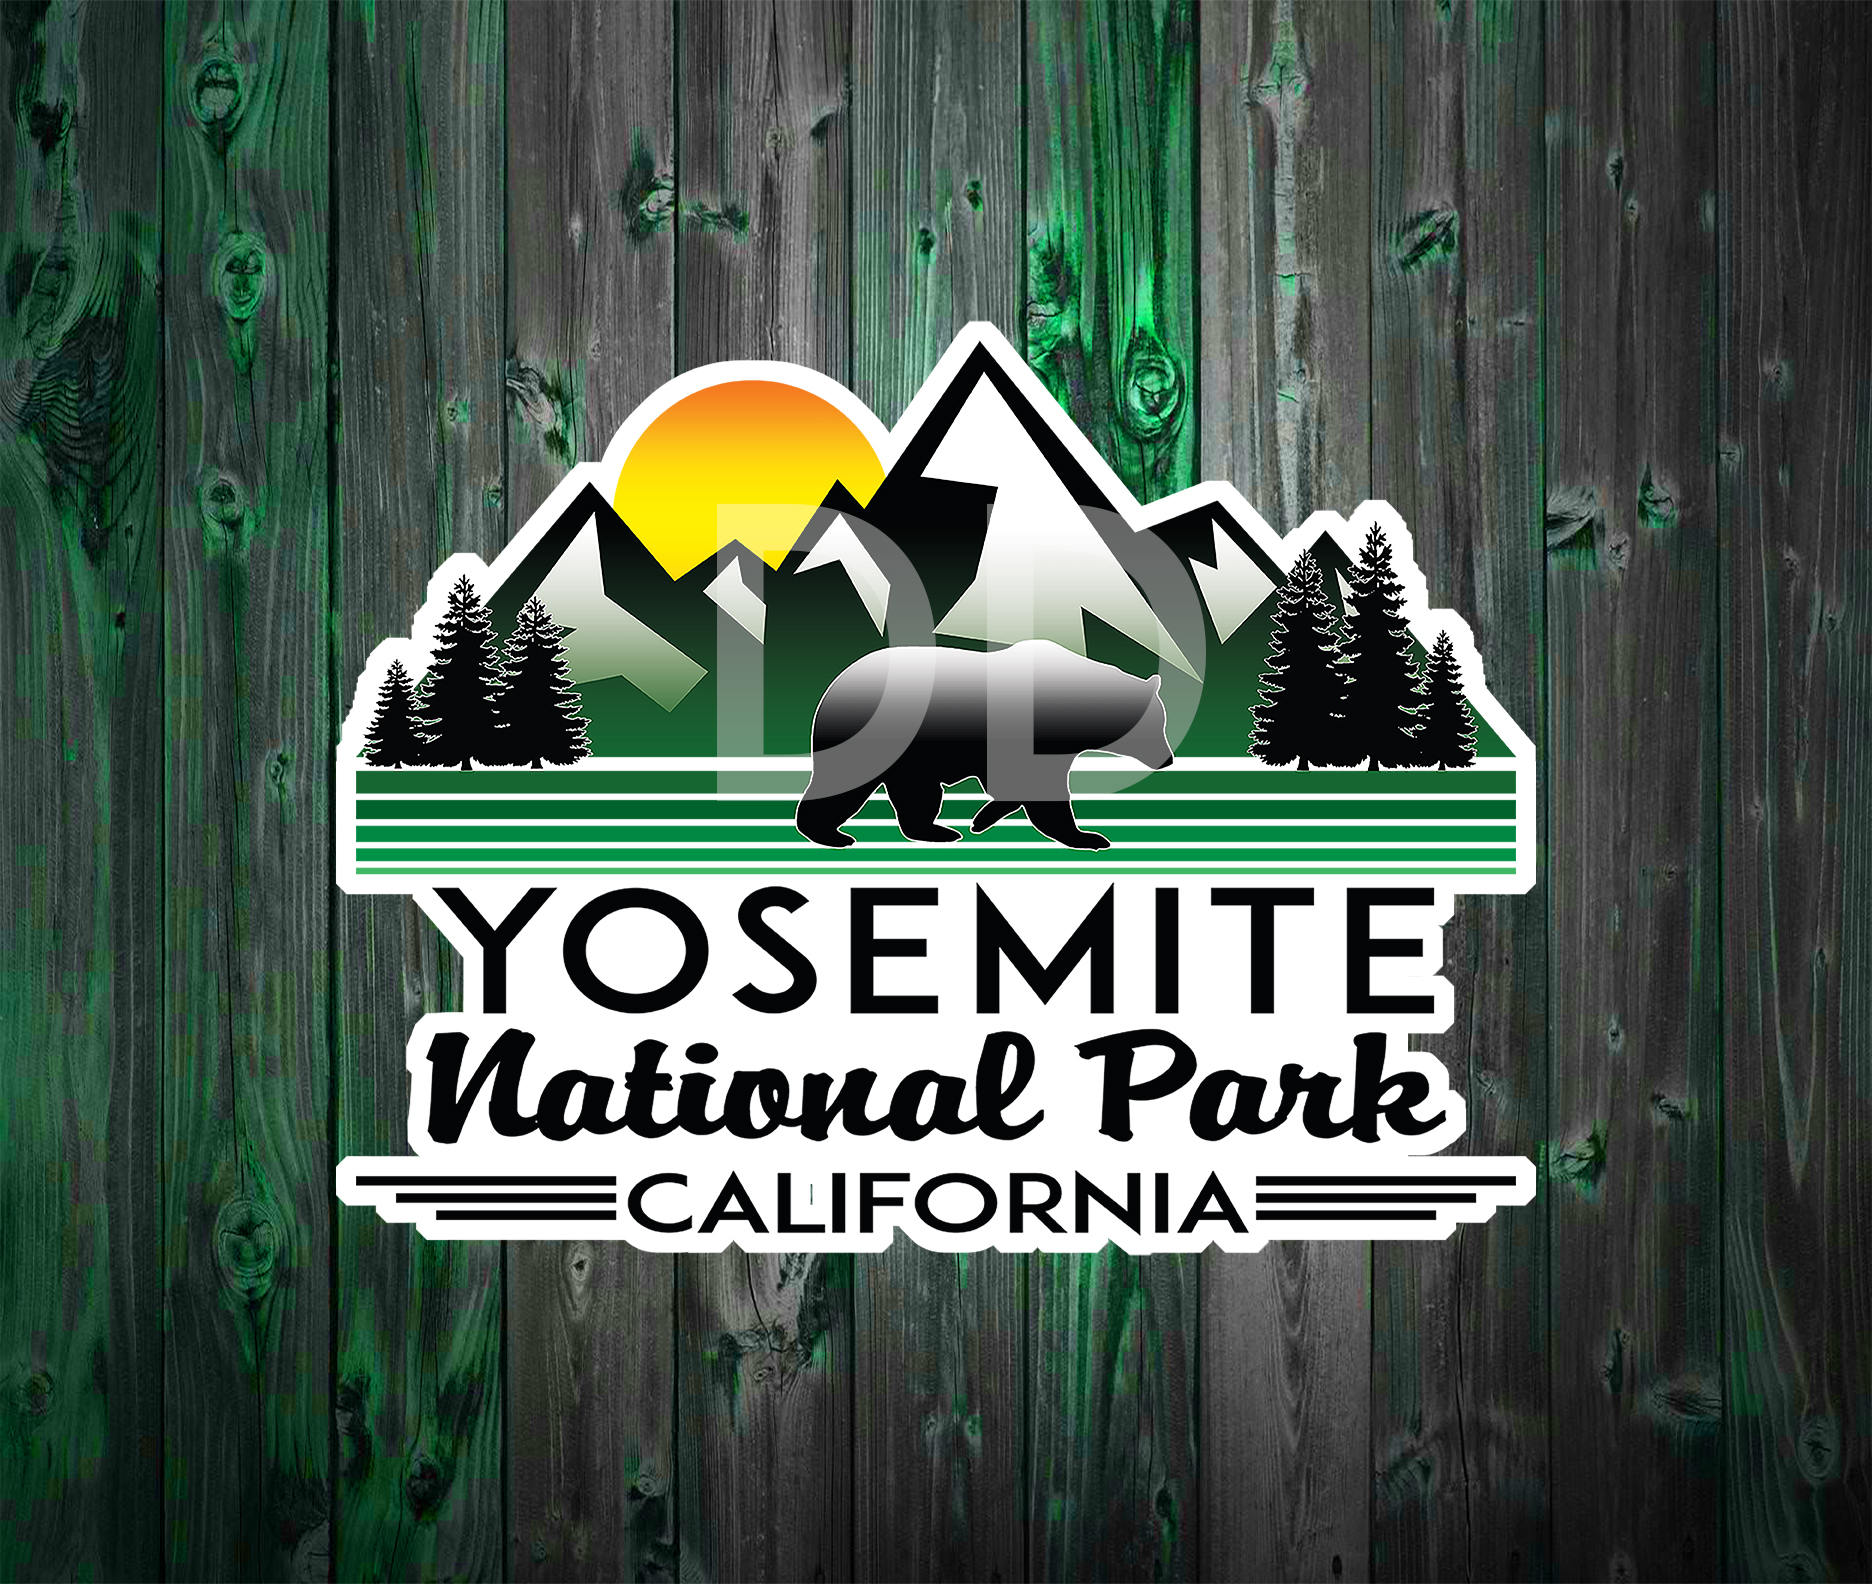 YOSEMITE NATIONAL PARK California Vinyl Sticker Bear Mountain Hiking Camping Climbing Decal Nature Outdoors